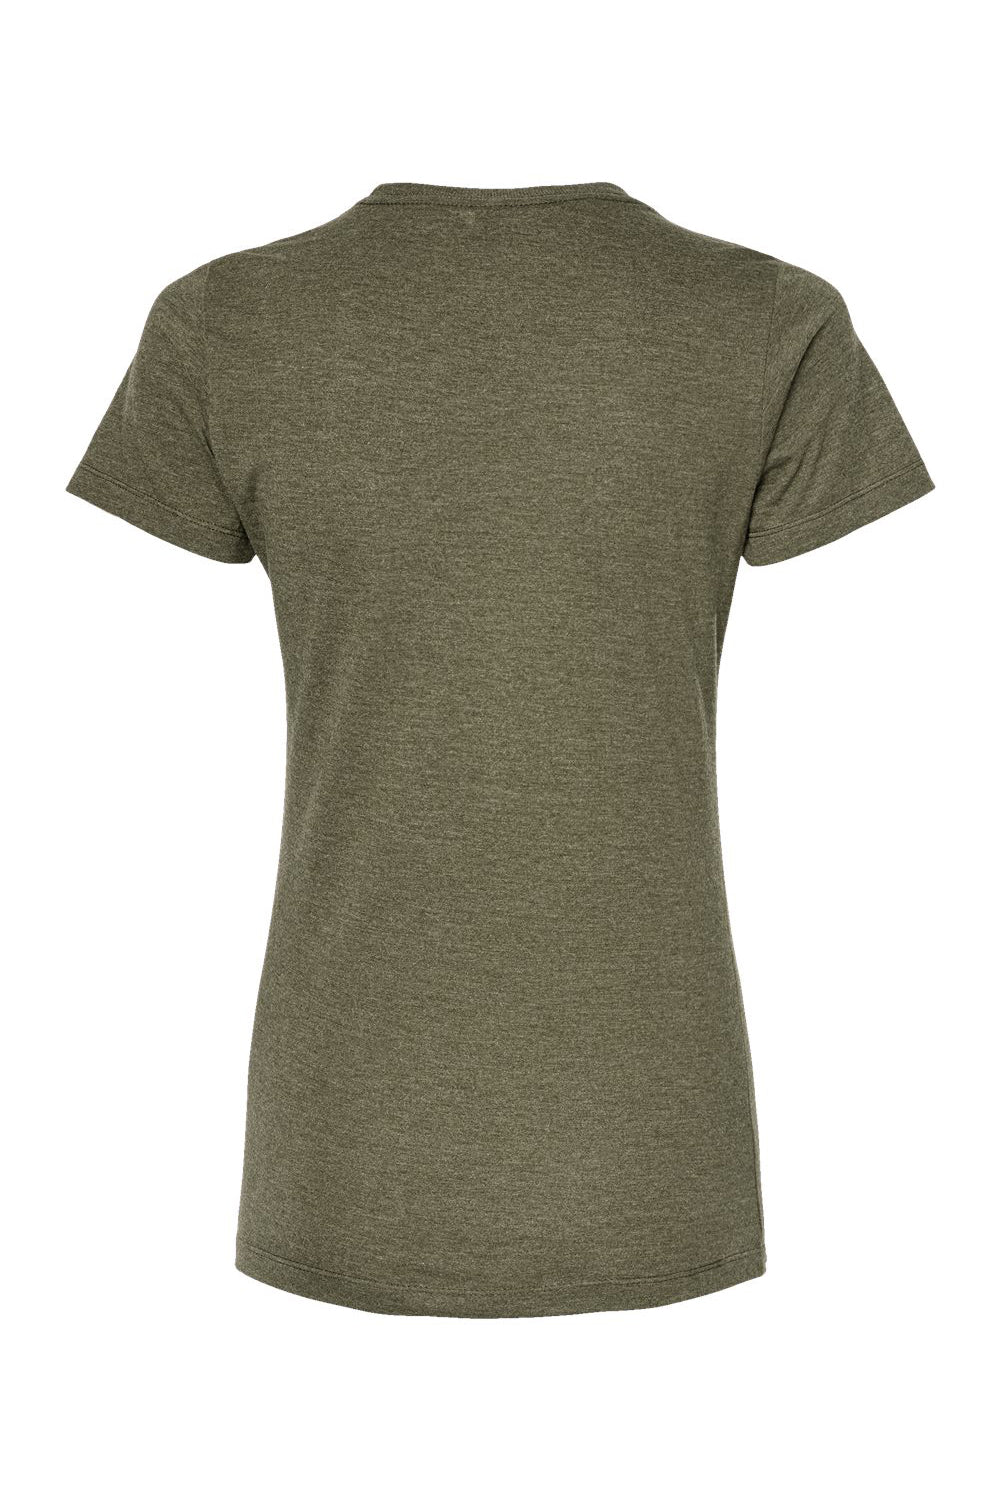 Tultex 542 Womens Premium Short Sleeve Crewneck T-Shirt Heather Olive Green Flat Back